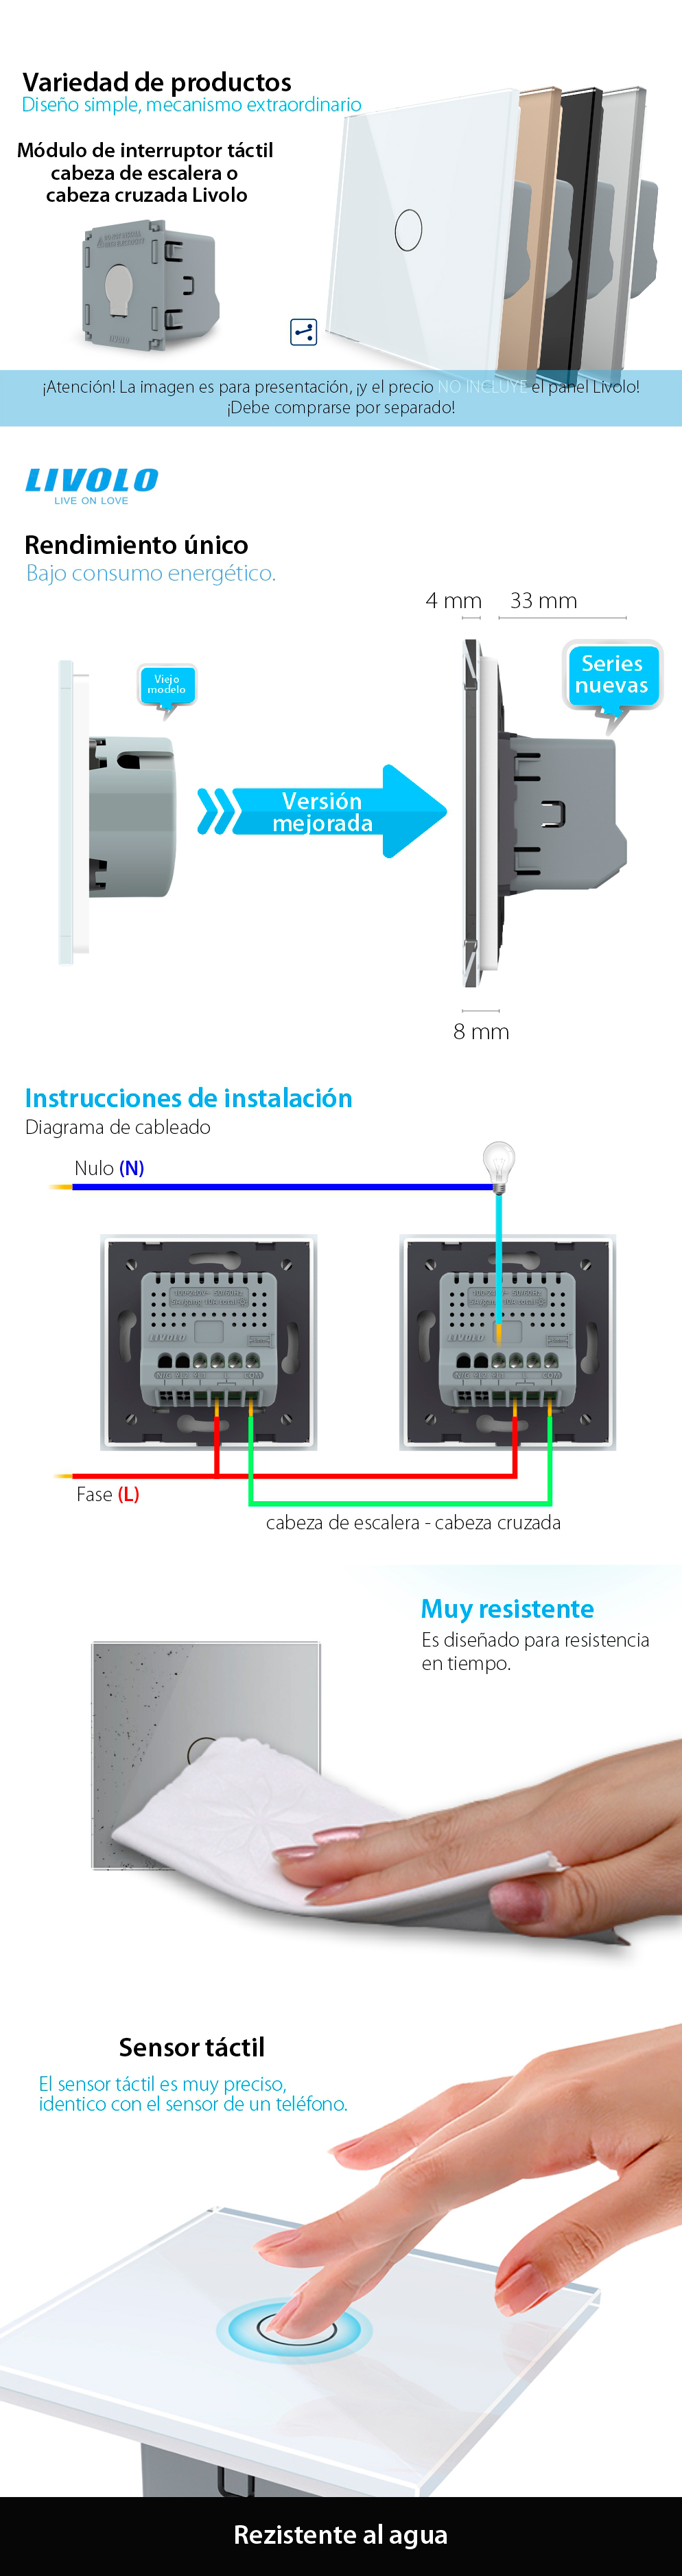 Módulo de interruptor conmutador/conmutador cruce táctil Livolo, serie nueva